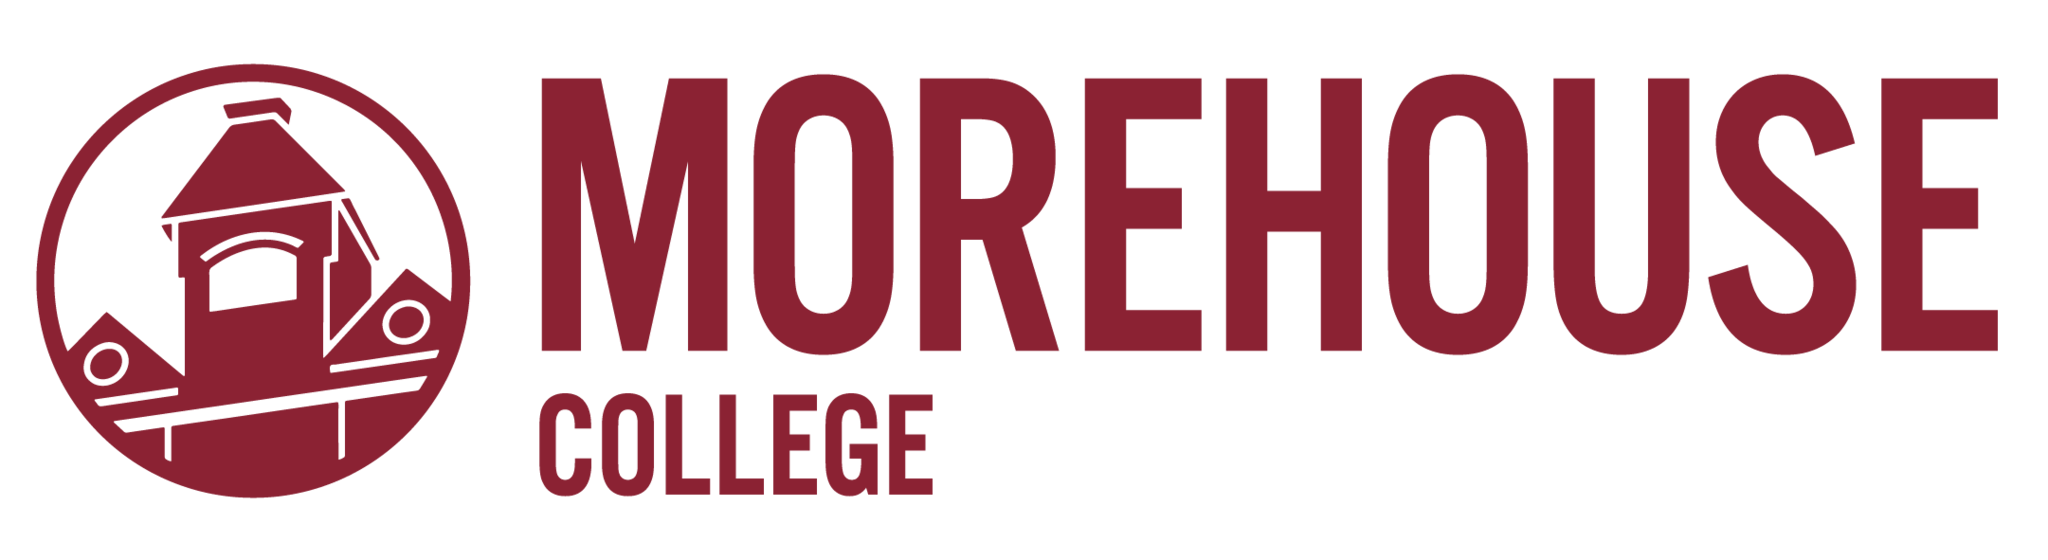 morehouse-college-logo